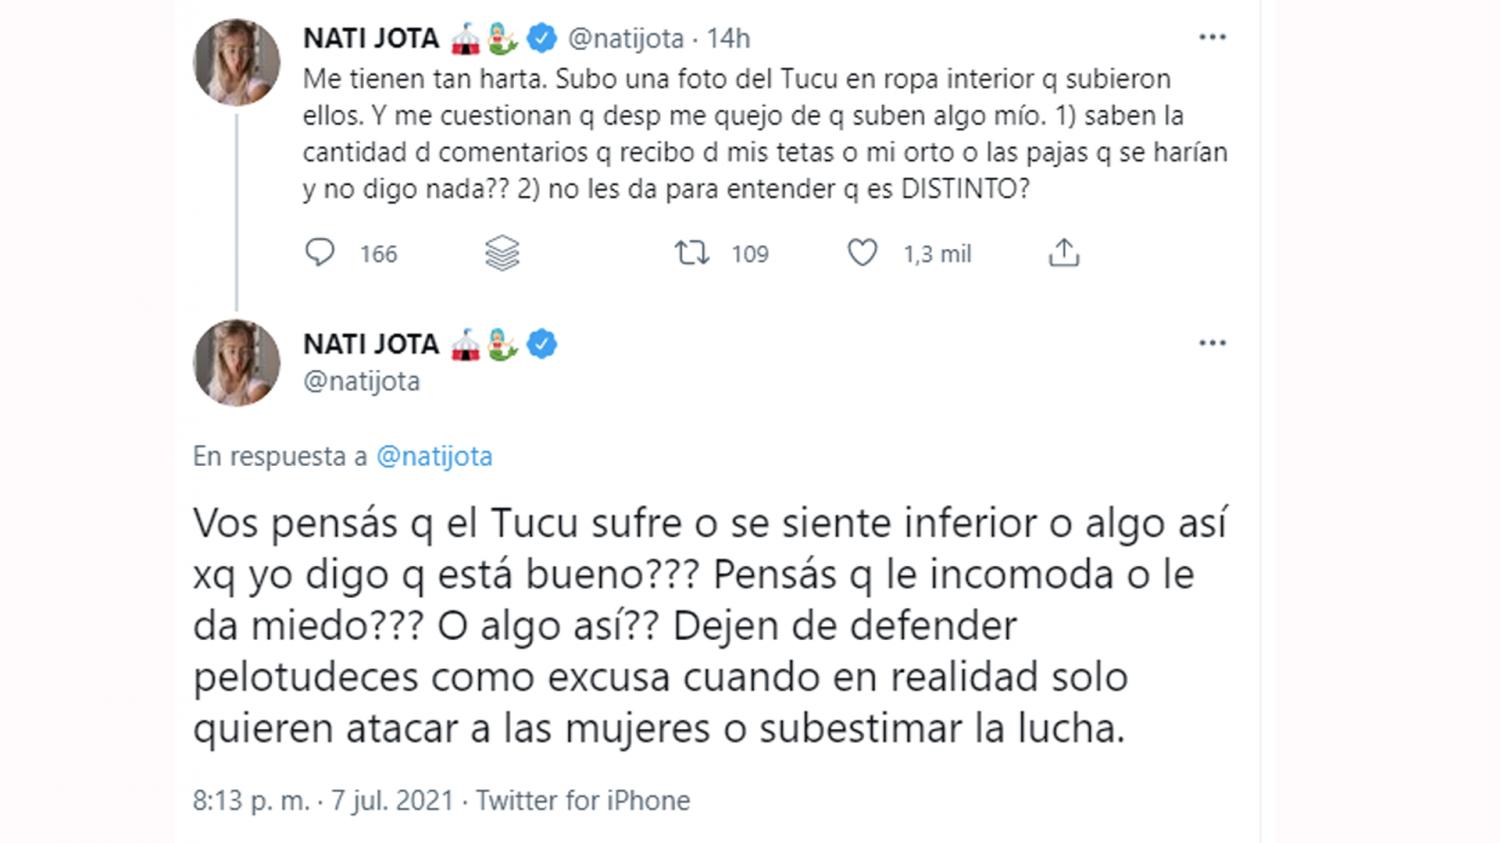 Por subir fotos de Tucu Correa en calzoncillos, acusaron a Nati Jota de cosificarlo